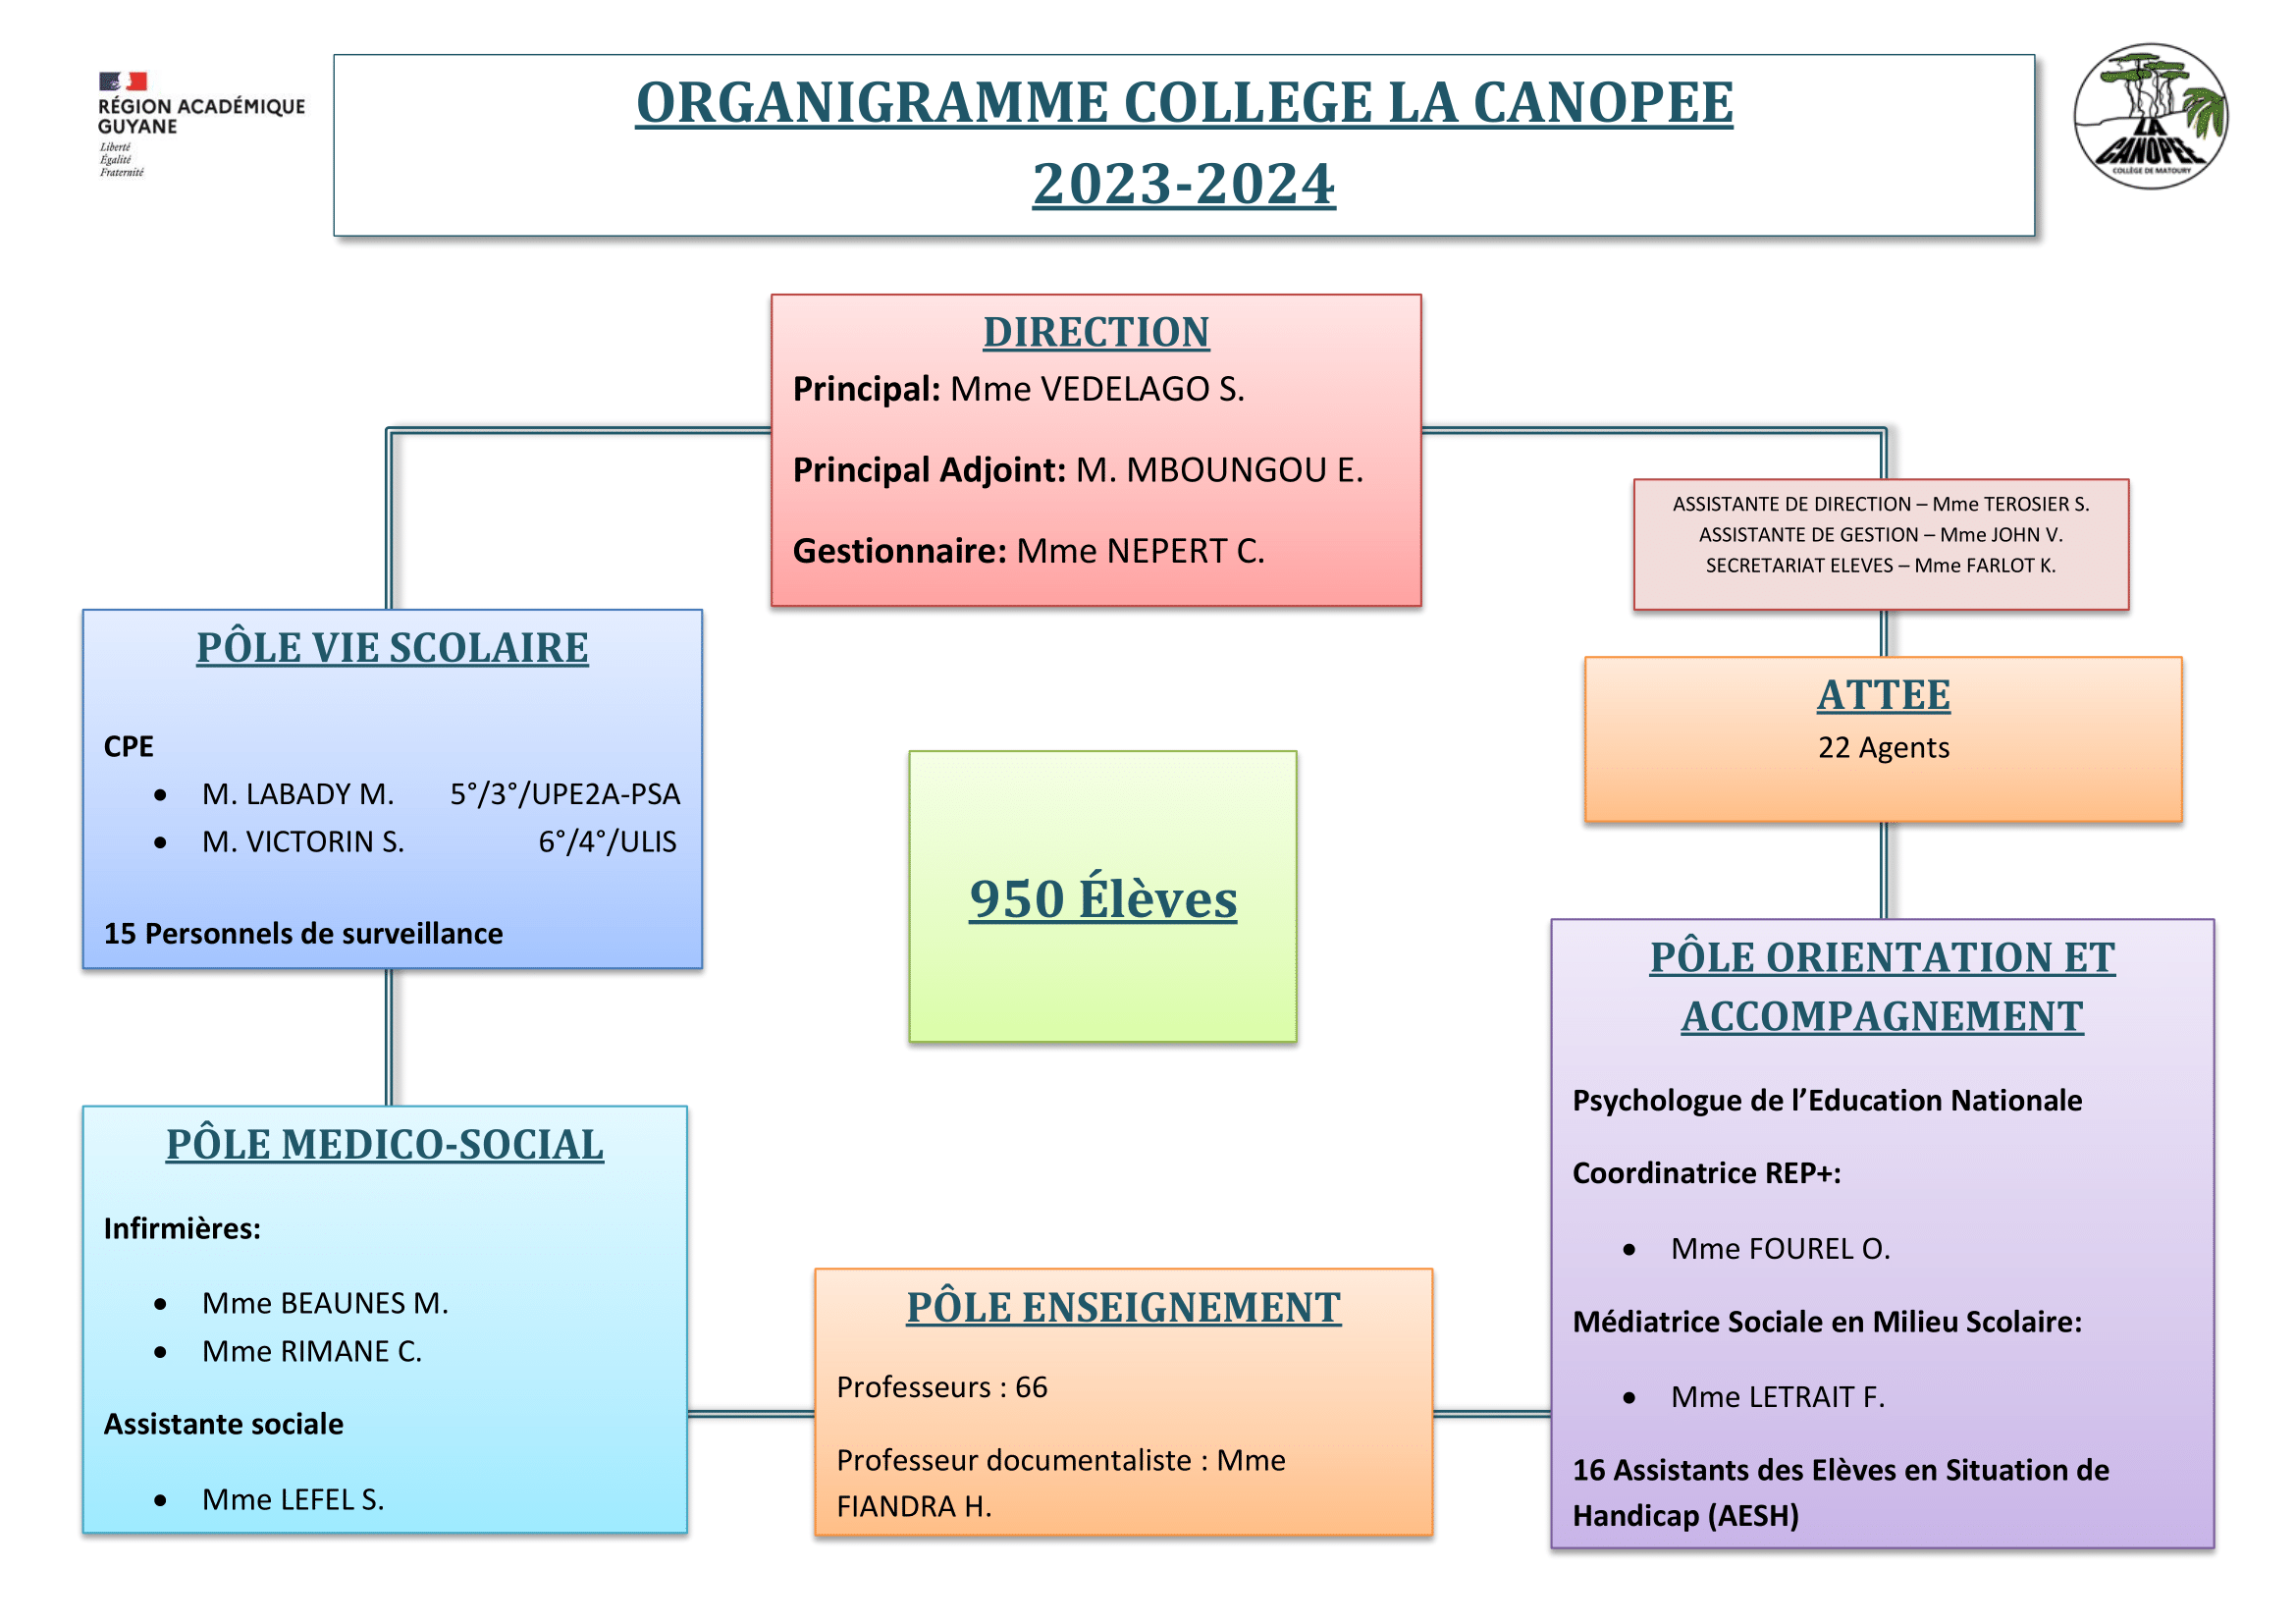 ORGANIGRAMME COLLEGE LA CANOPEE 2023-2024